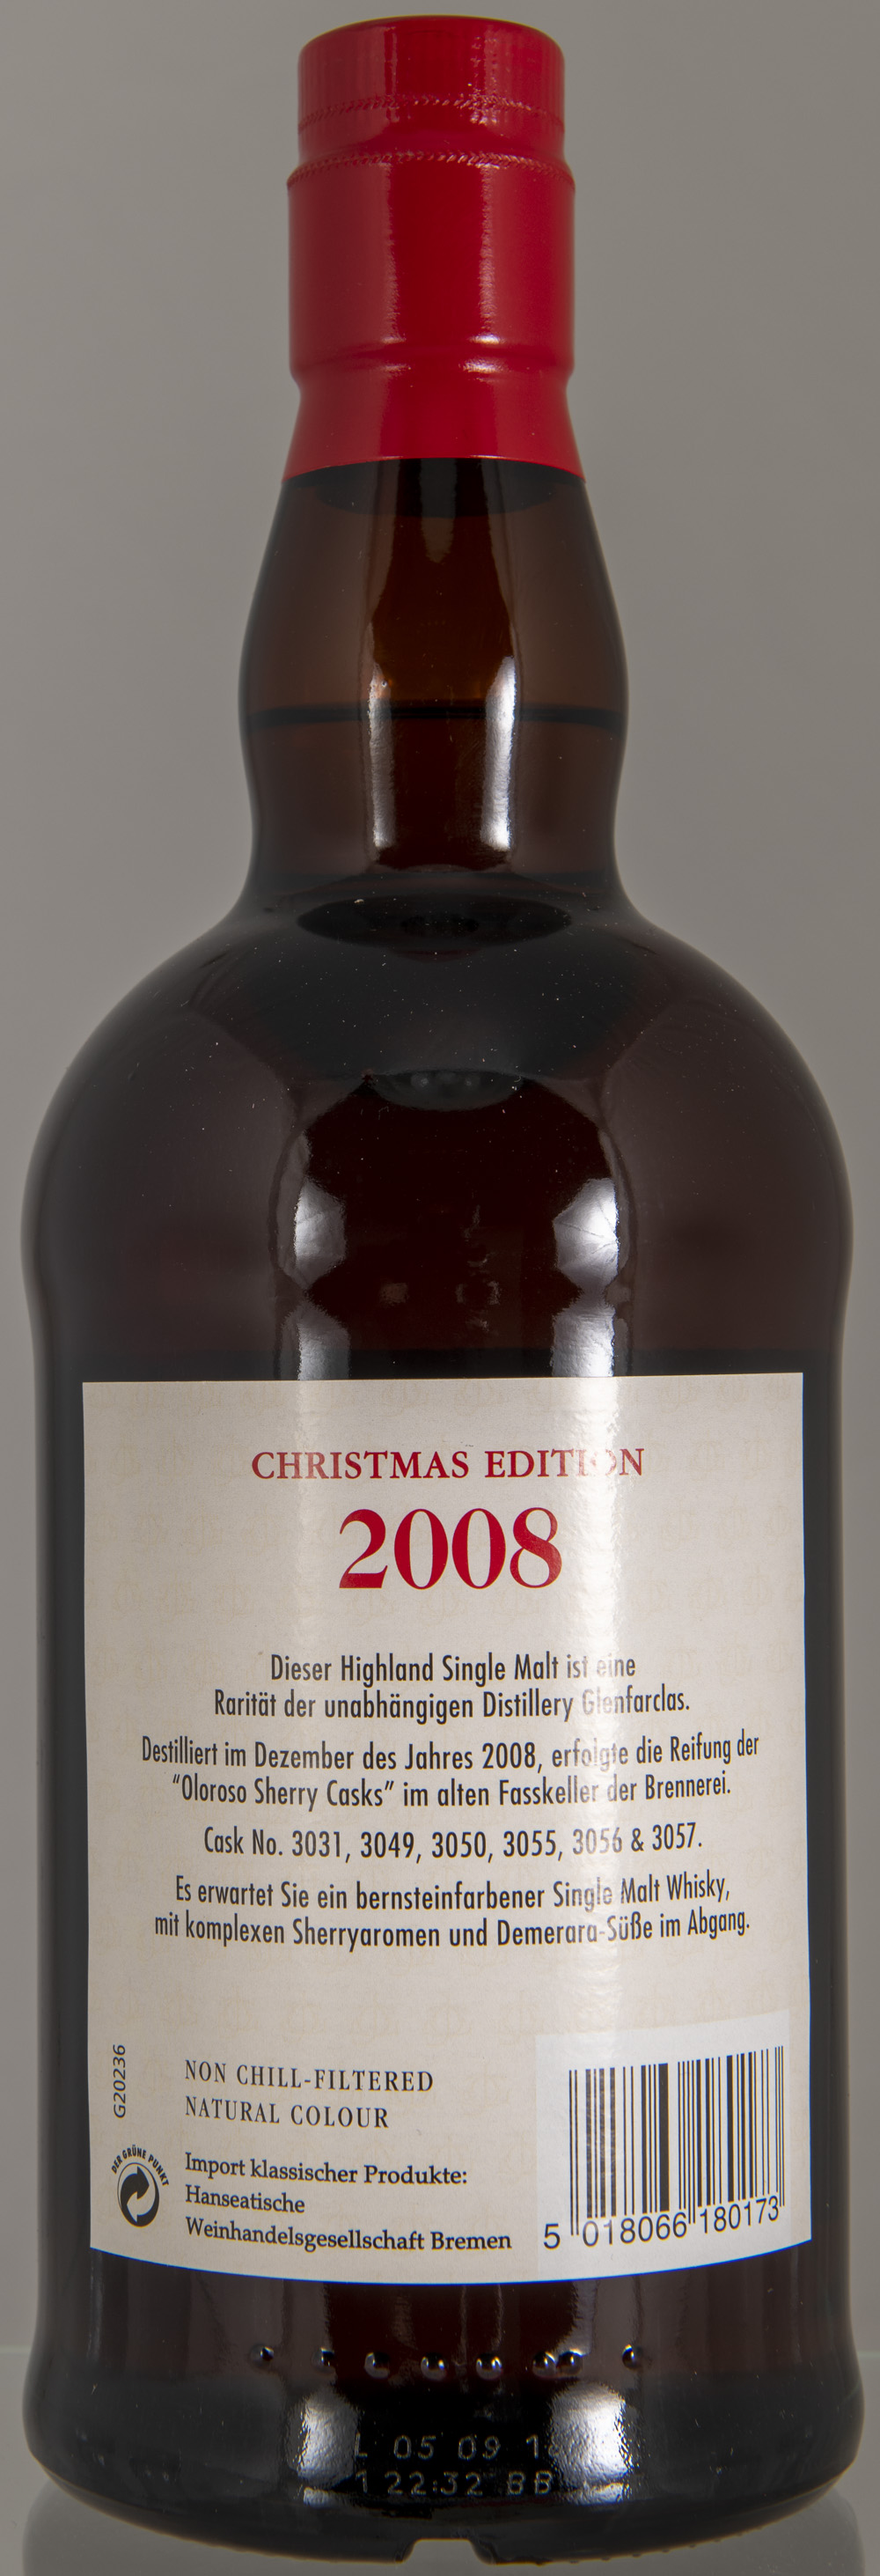 Billede: PHC_2476 - Glenfarclas 2008 Christmas Edition - bottle back.jpg